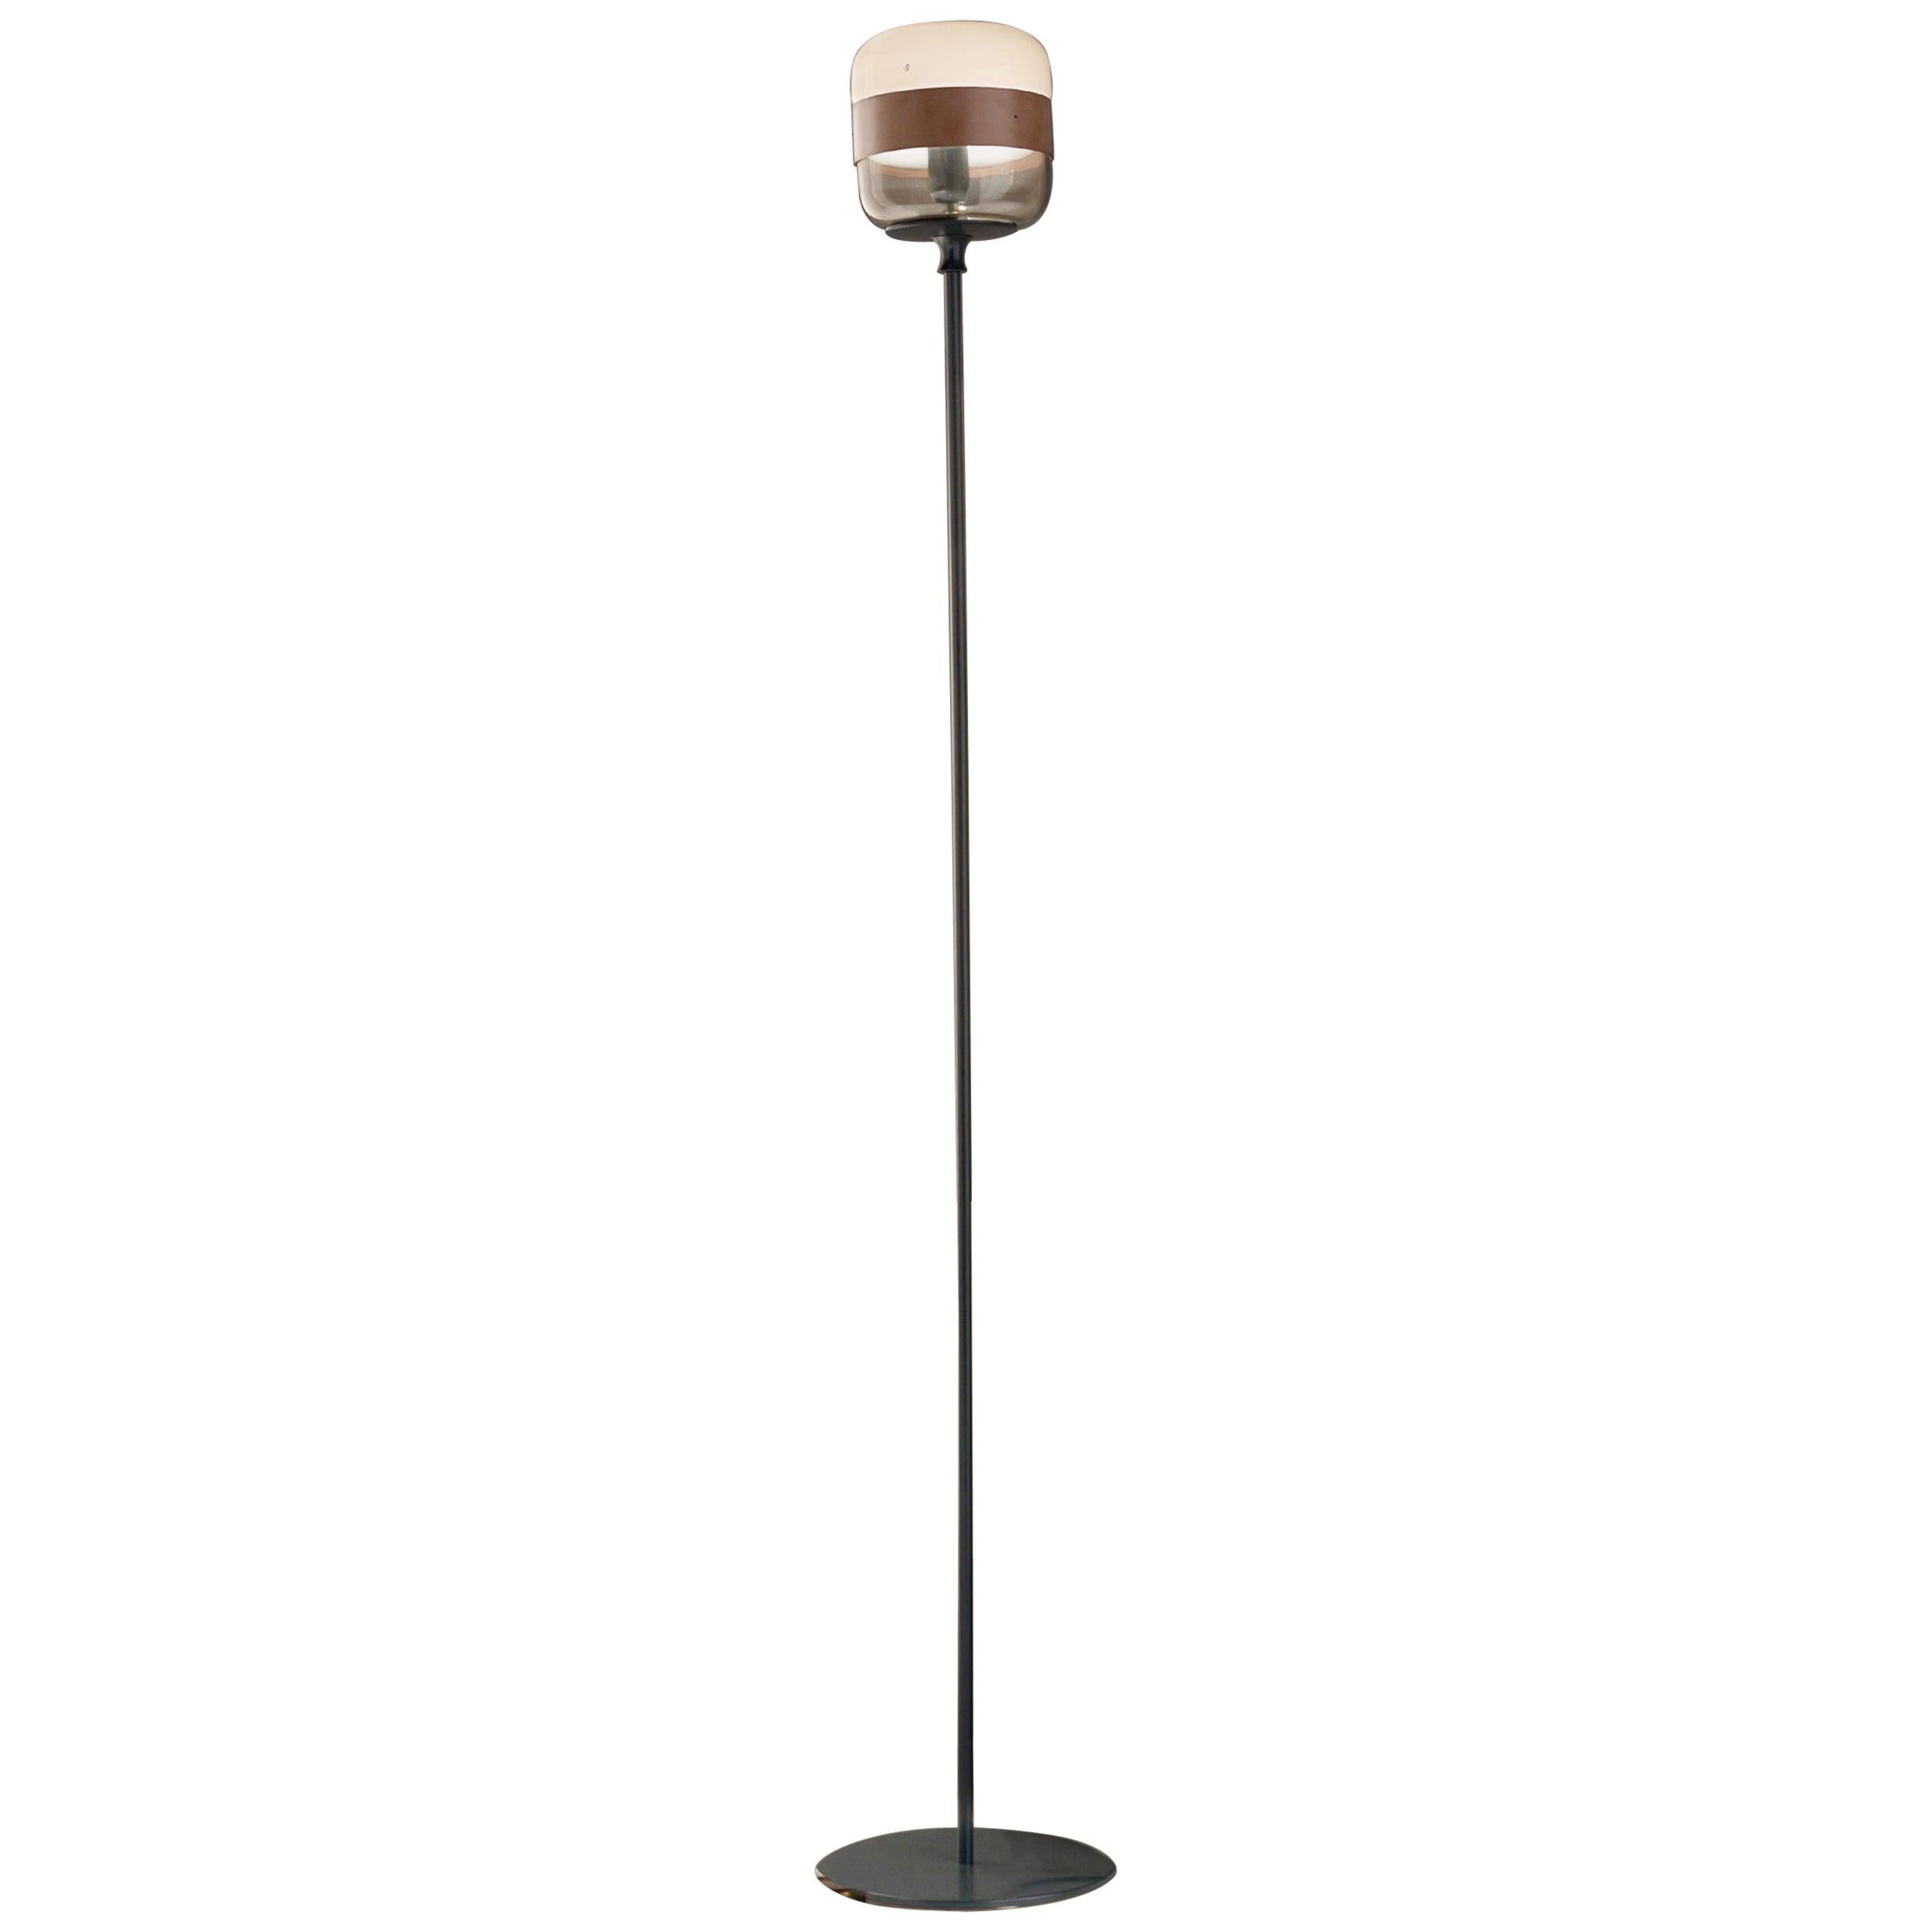 Vistosi Futura PTP Floor Lamp in Smoke and White by Hangar Design Group